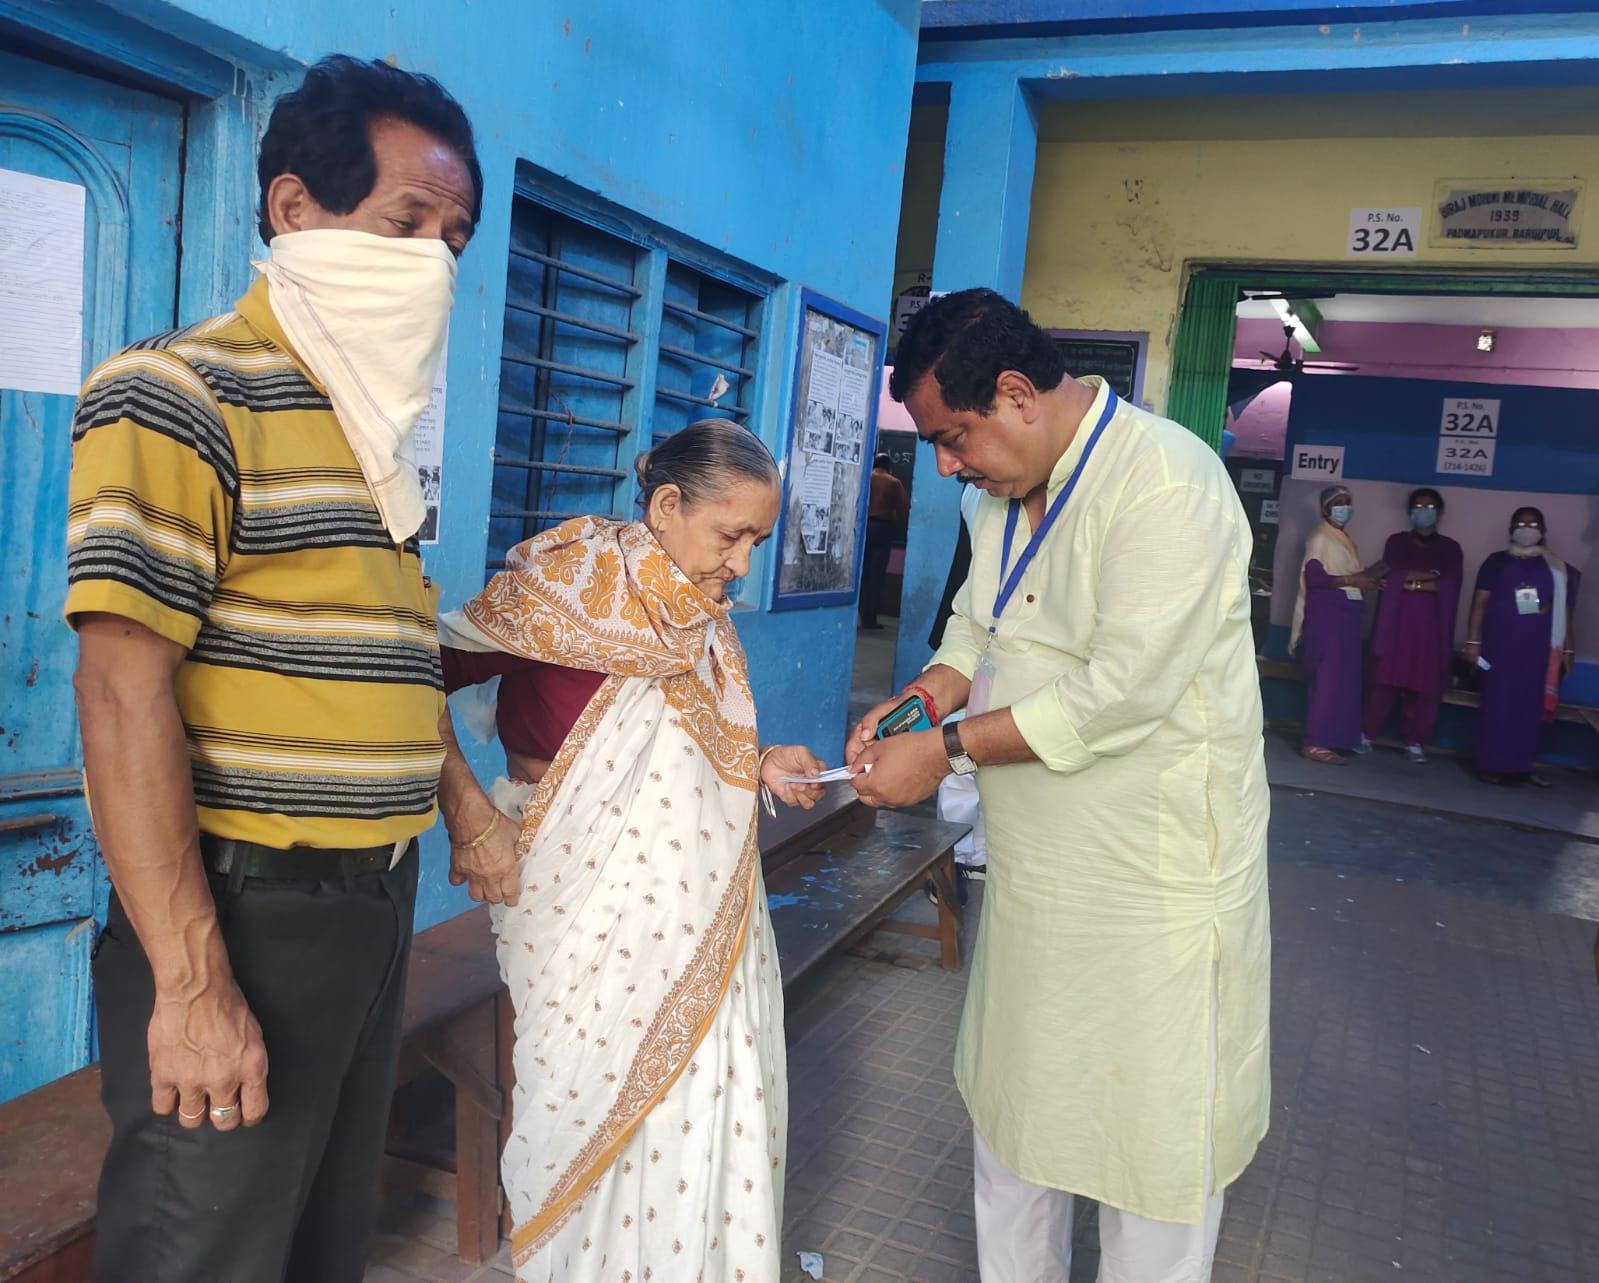 Municipal Election: উৎসবের মেজাজেই ভোট বারুইপুরে, বিক্ষিপ্ত অশান্তি এড়িয়ে সোনারপুরেও নির্বাচন শান্তিপূর্ণ